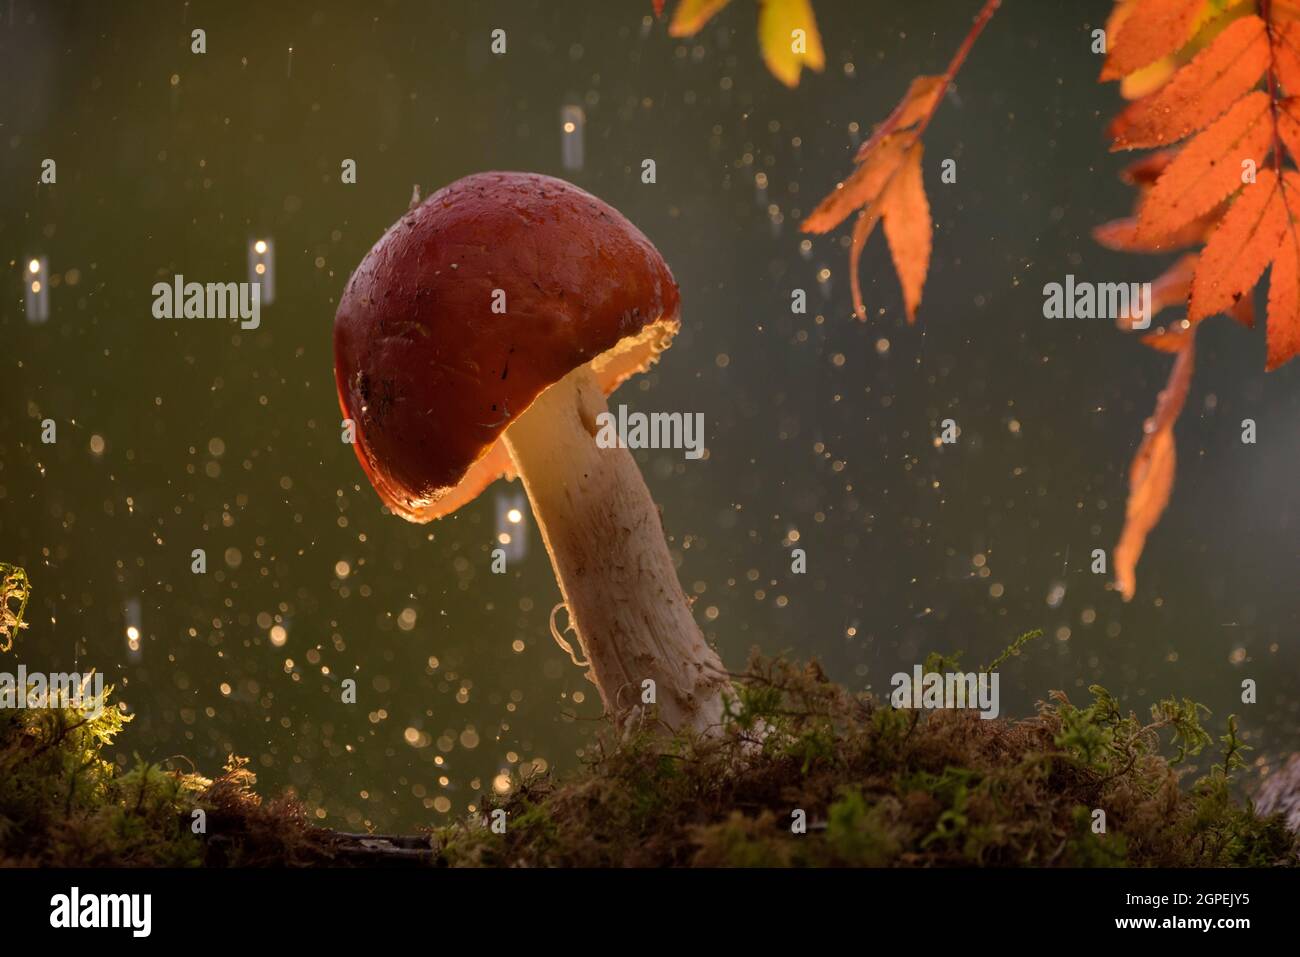 Fly Agaric Mushroom in the rain Stock Photo